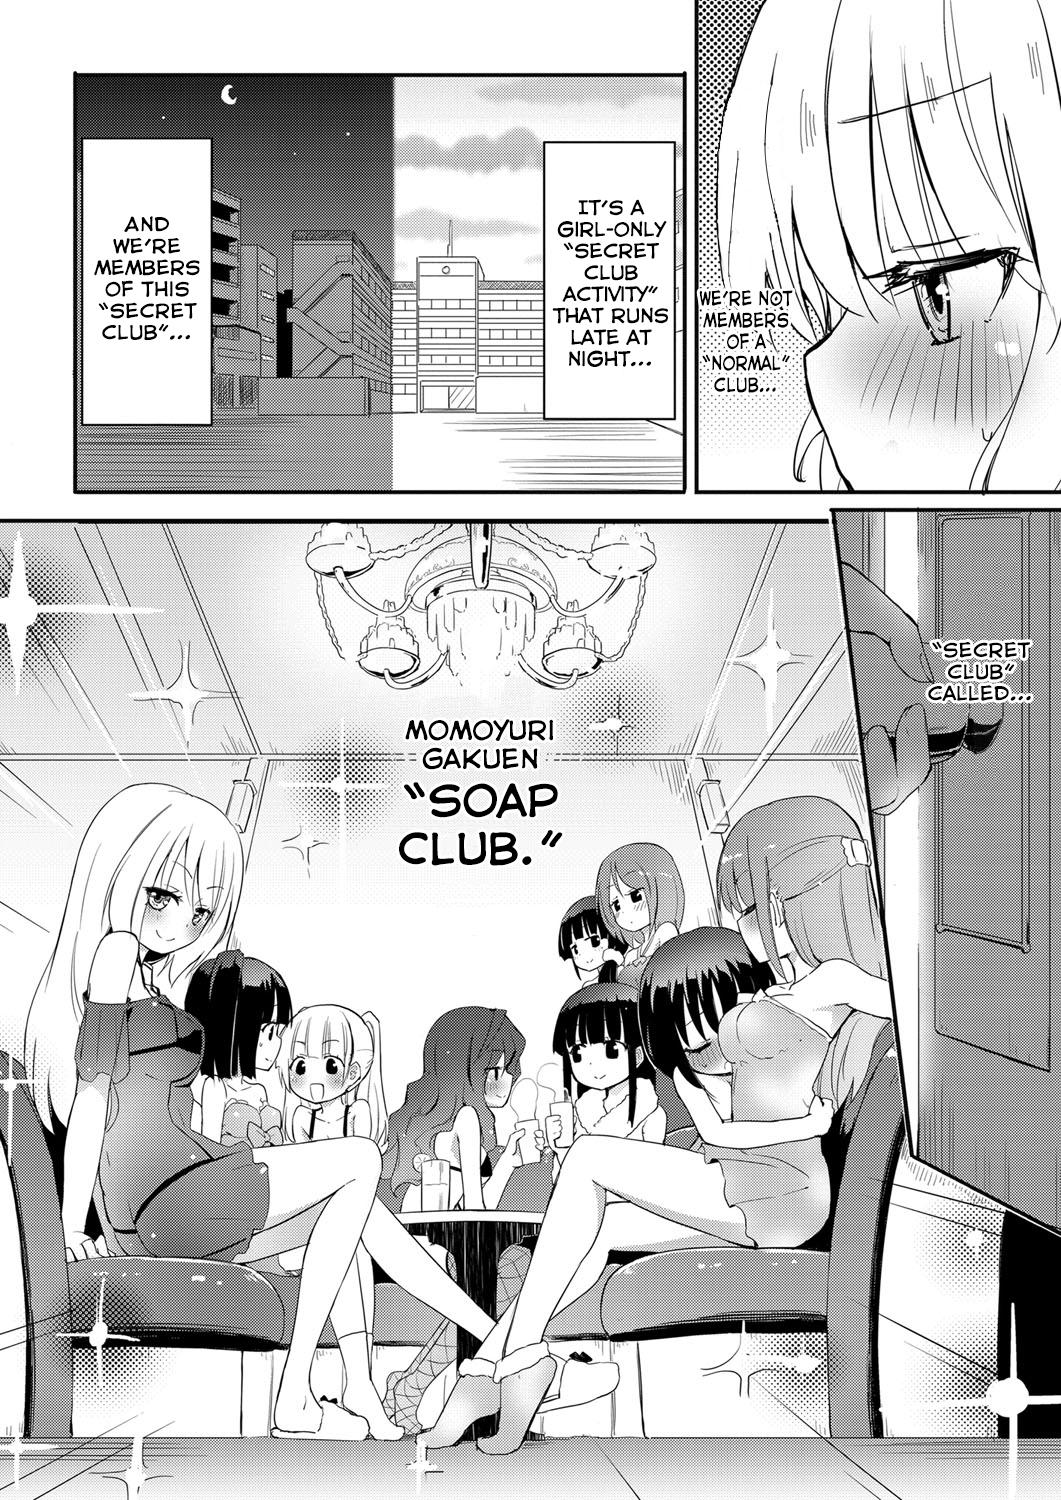 Momoyuri Gakuen Himitsu no Soap-bu | The Secret Soap Club of Momoyuri Academy 19